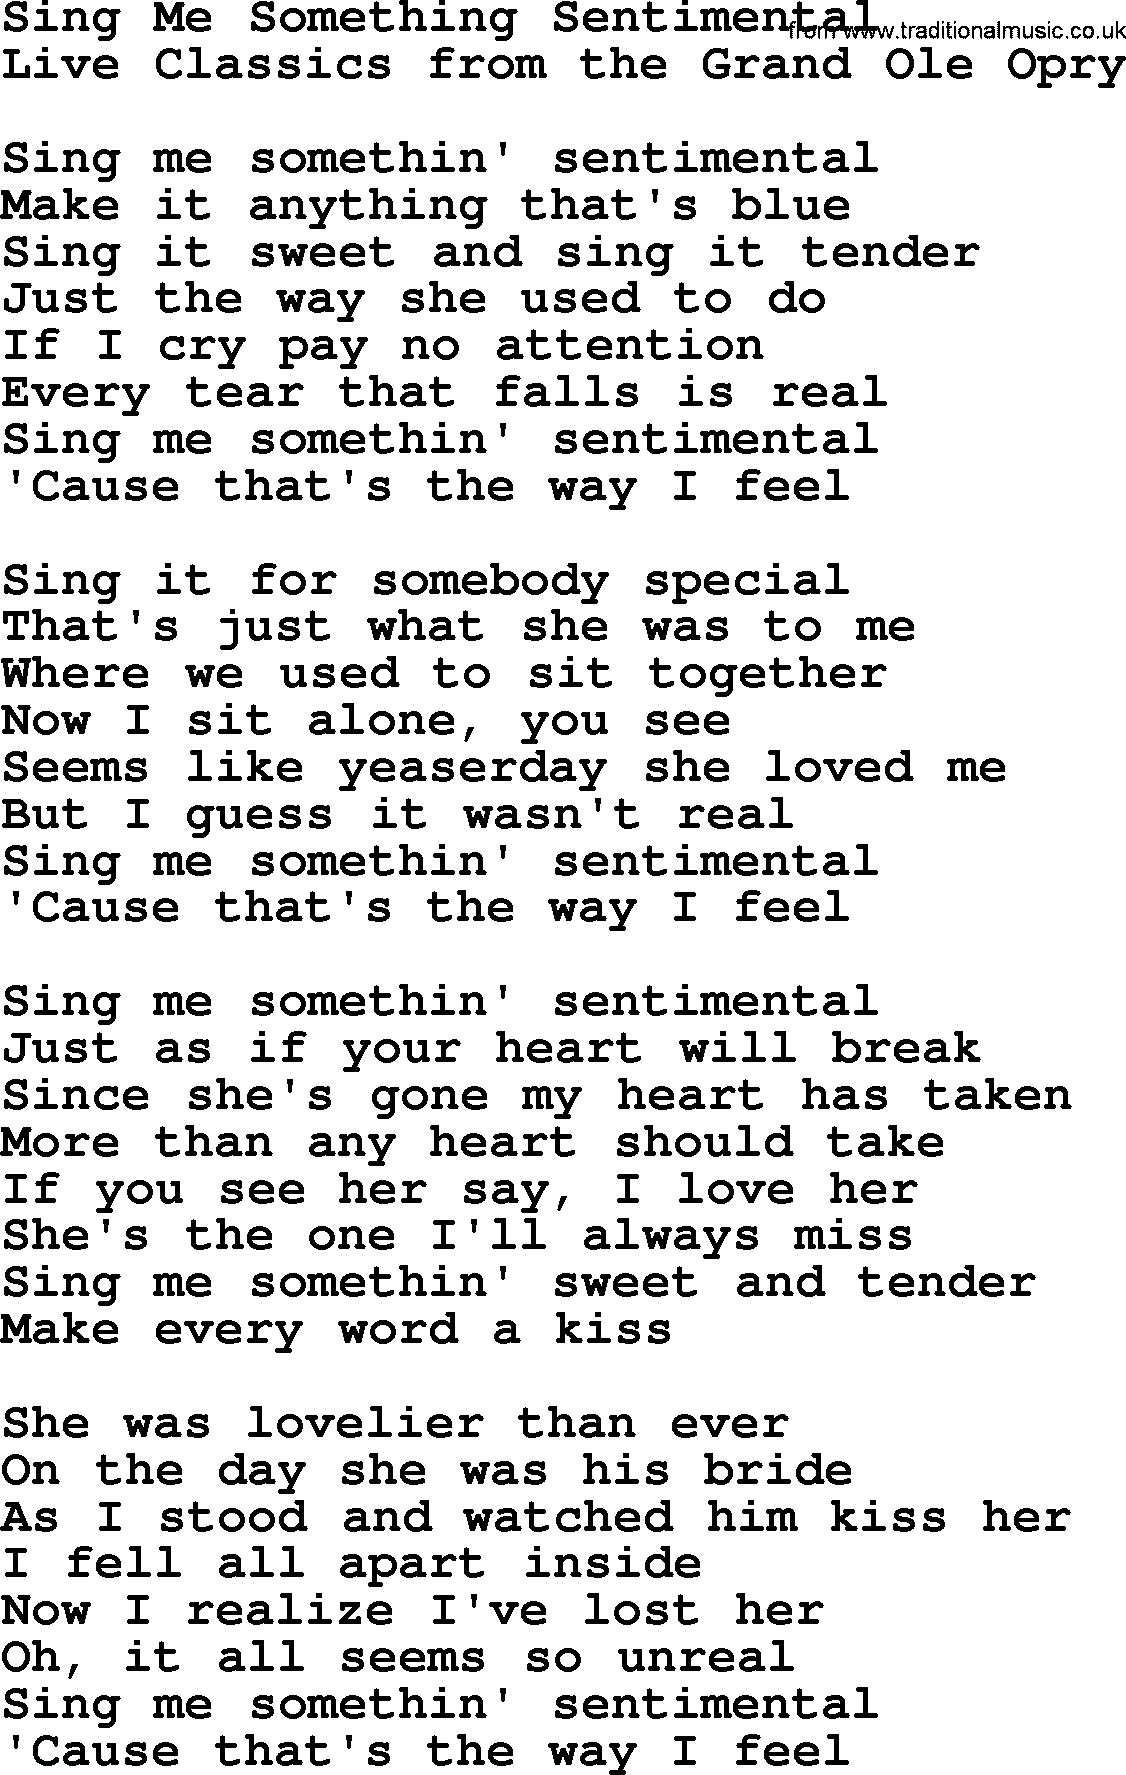 Marty Robbins song: Sing Me Something Sentimental, lyrics